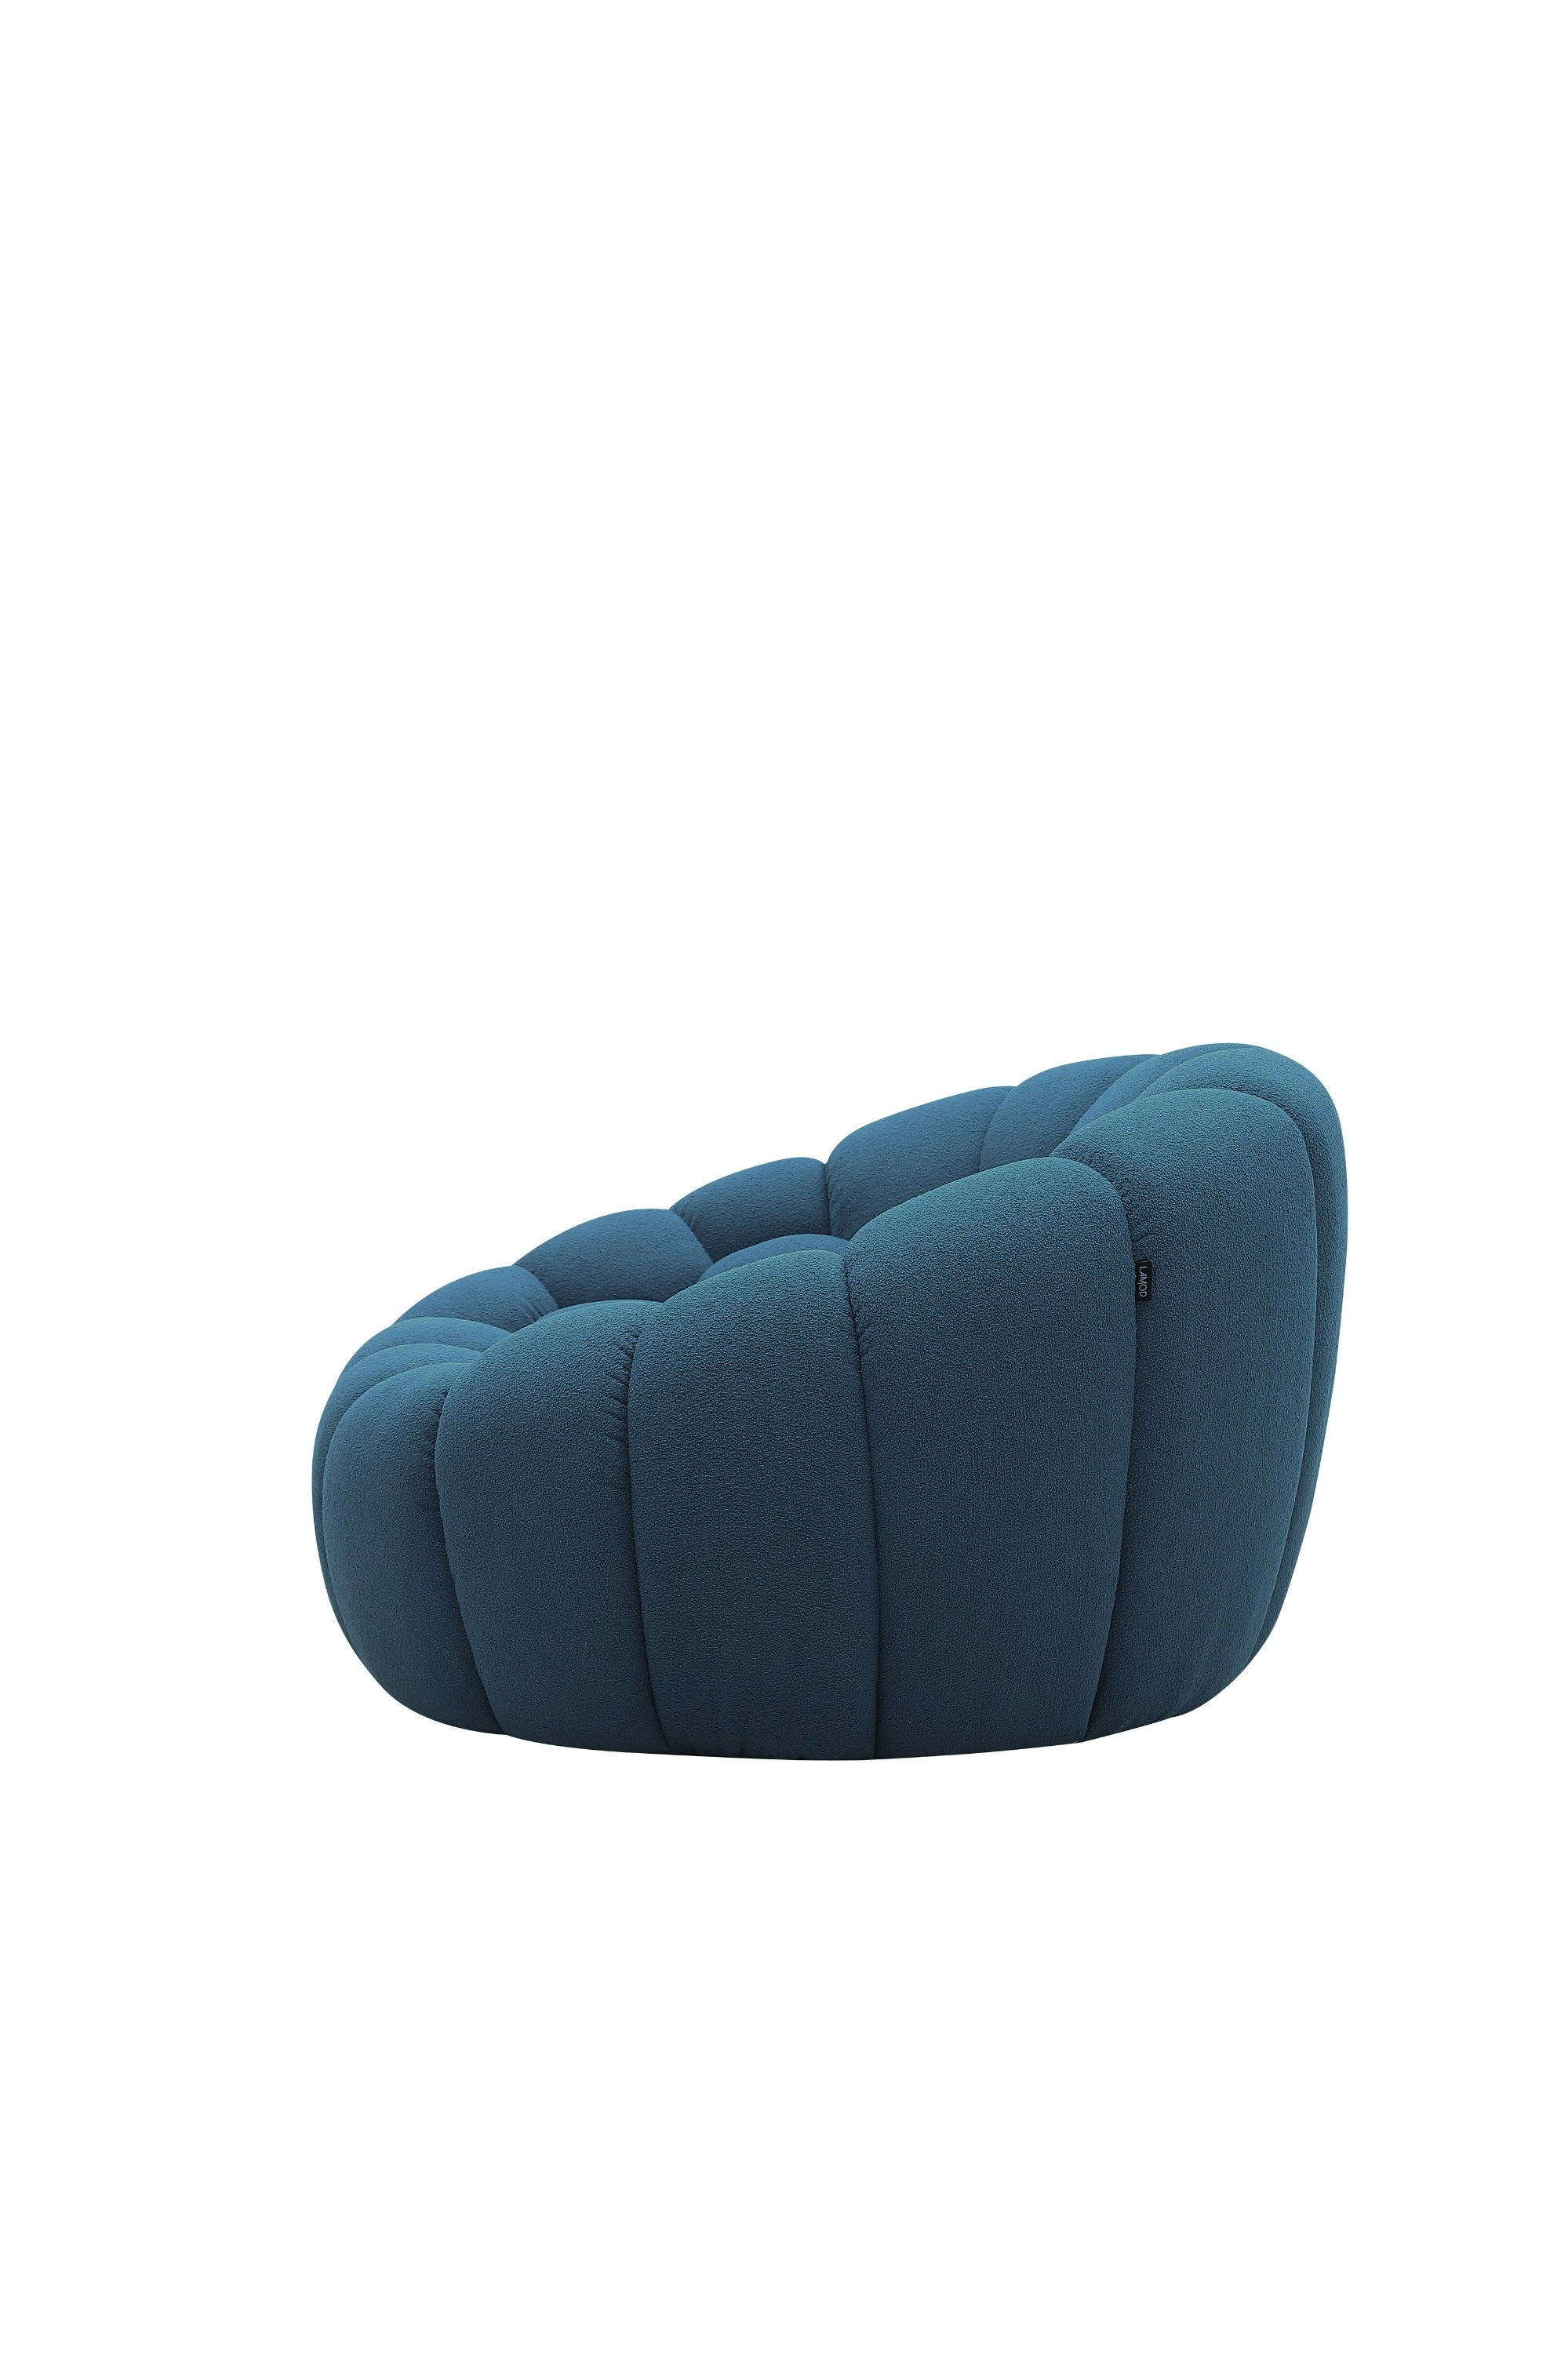 Divani Casa Yolonda - Modern Curved Teal Fabric Chair-Lounge Chair-VIG-Wall2Wall Furnishings